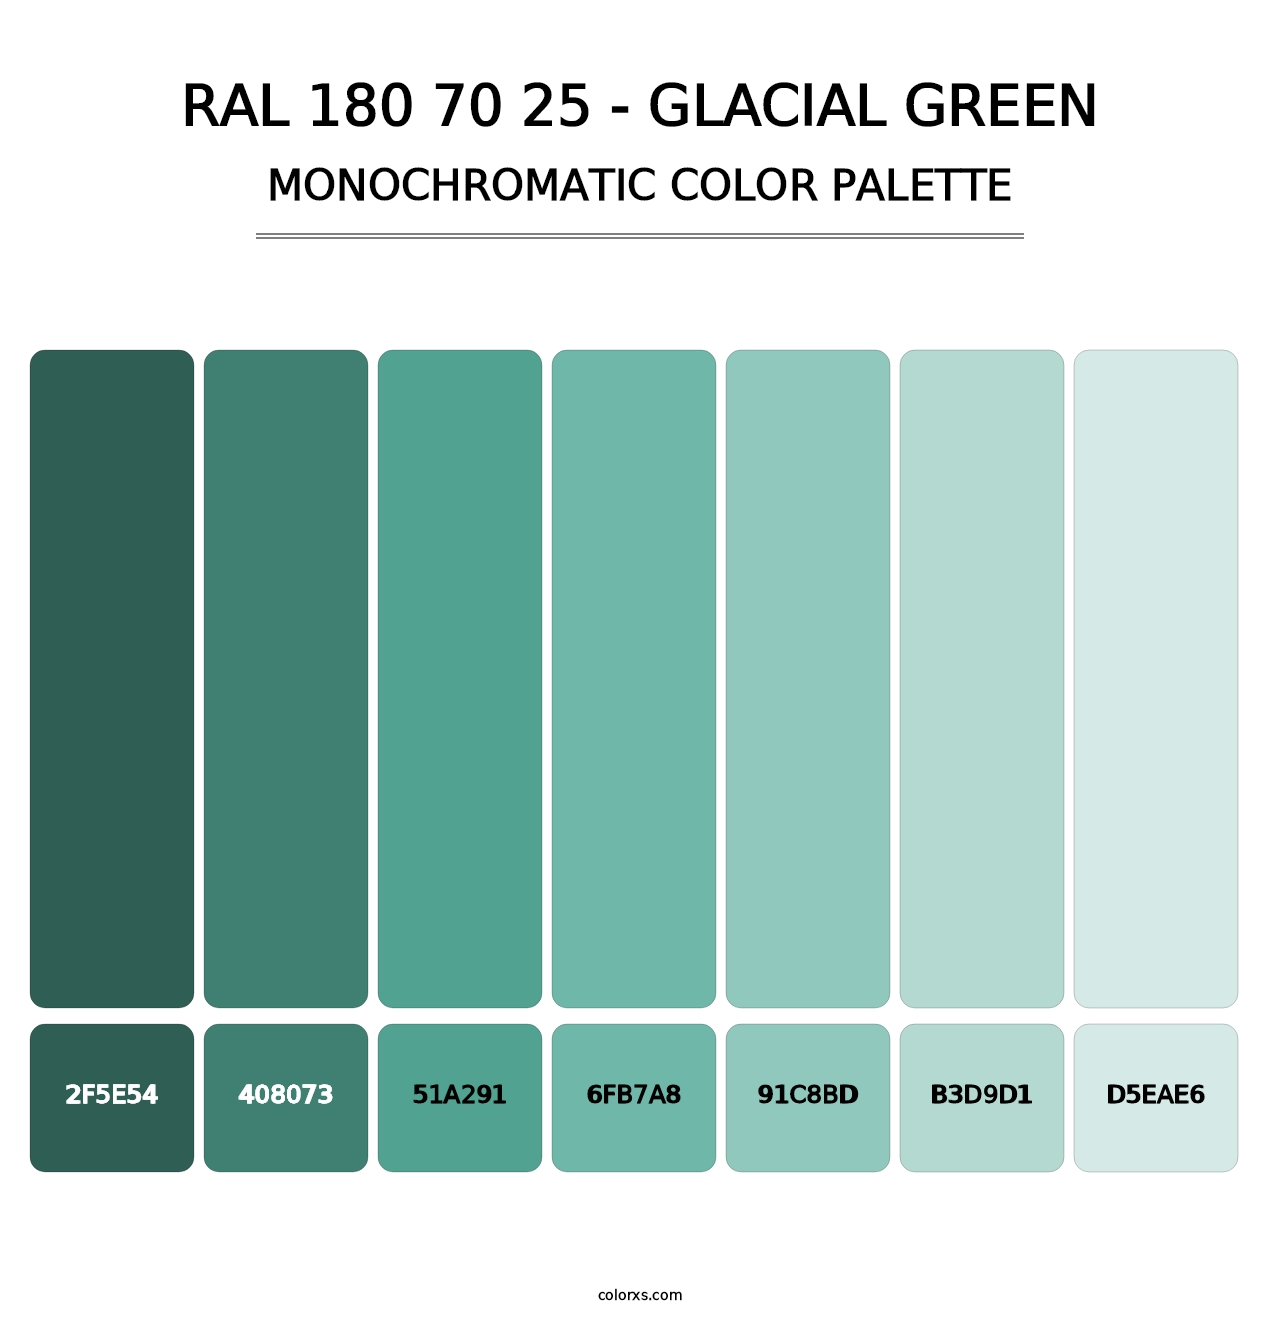 RAL 180 70 25 - Glacial Green - Monochromatic Color Palette